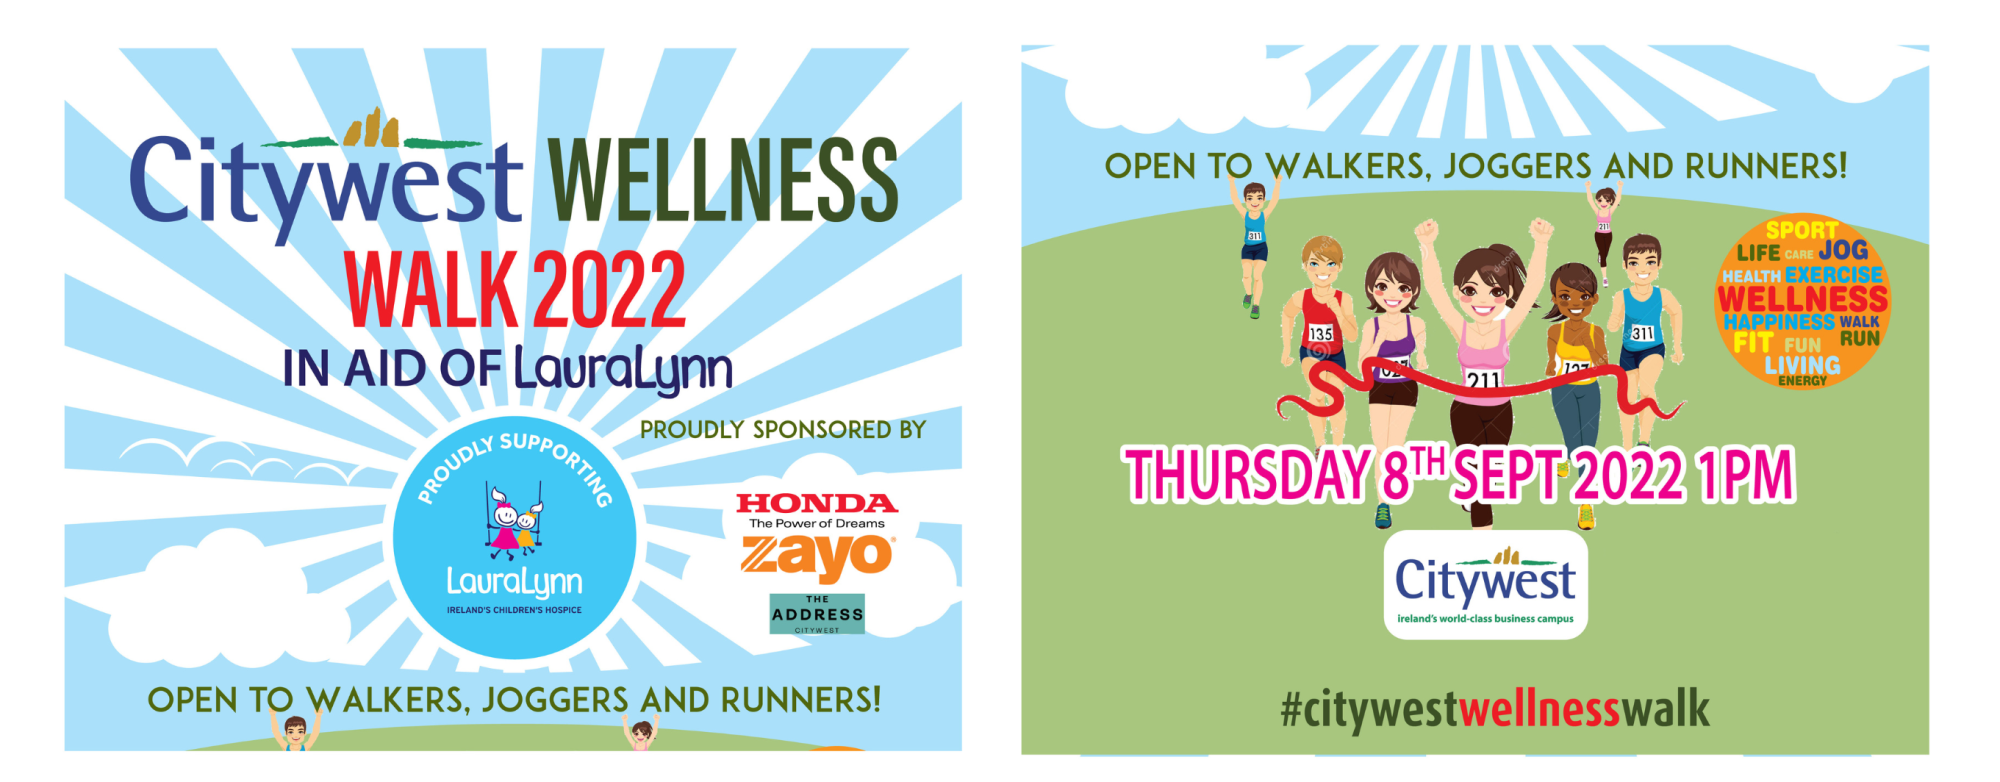 Citywest Wellness Walk information